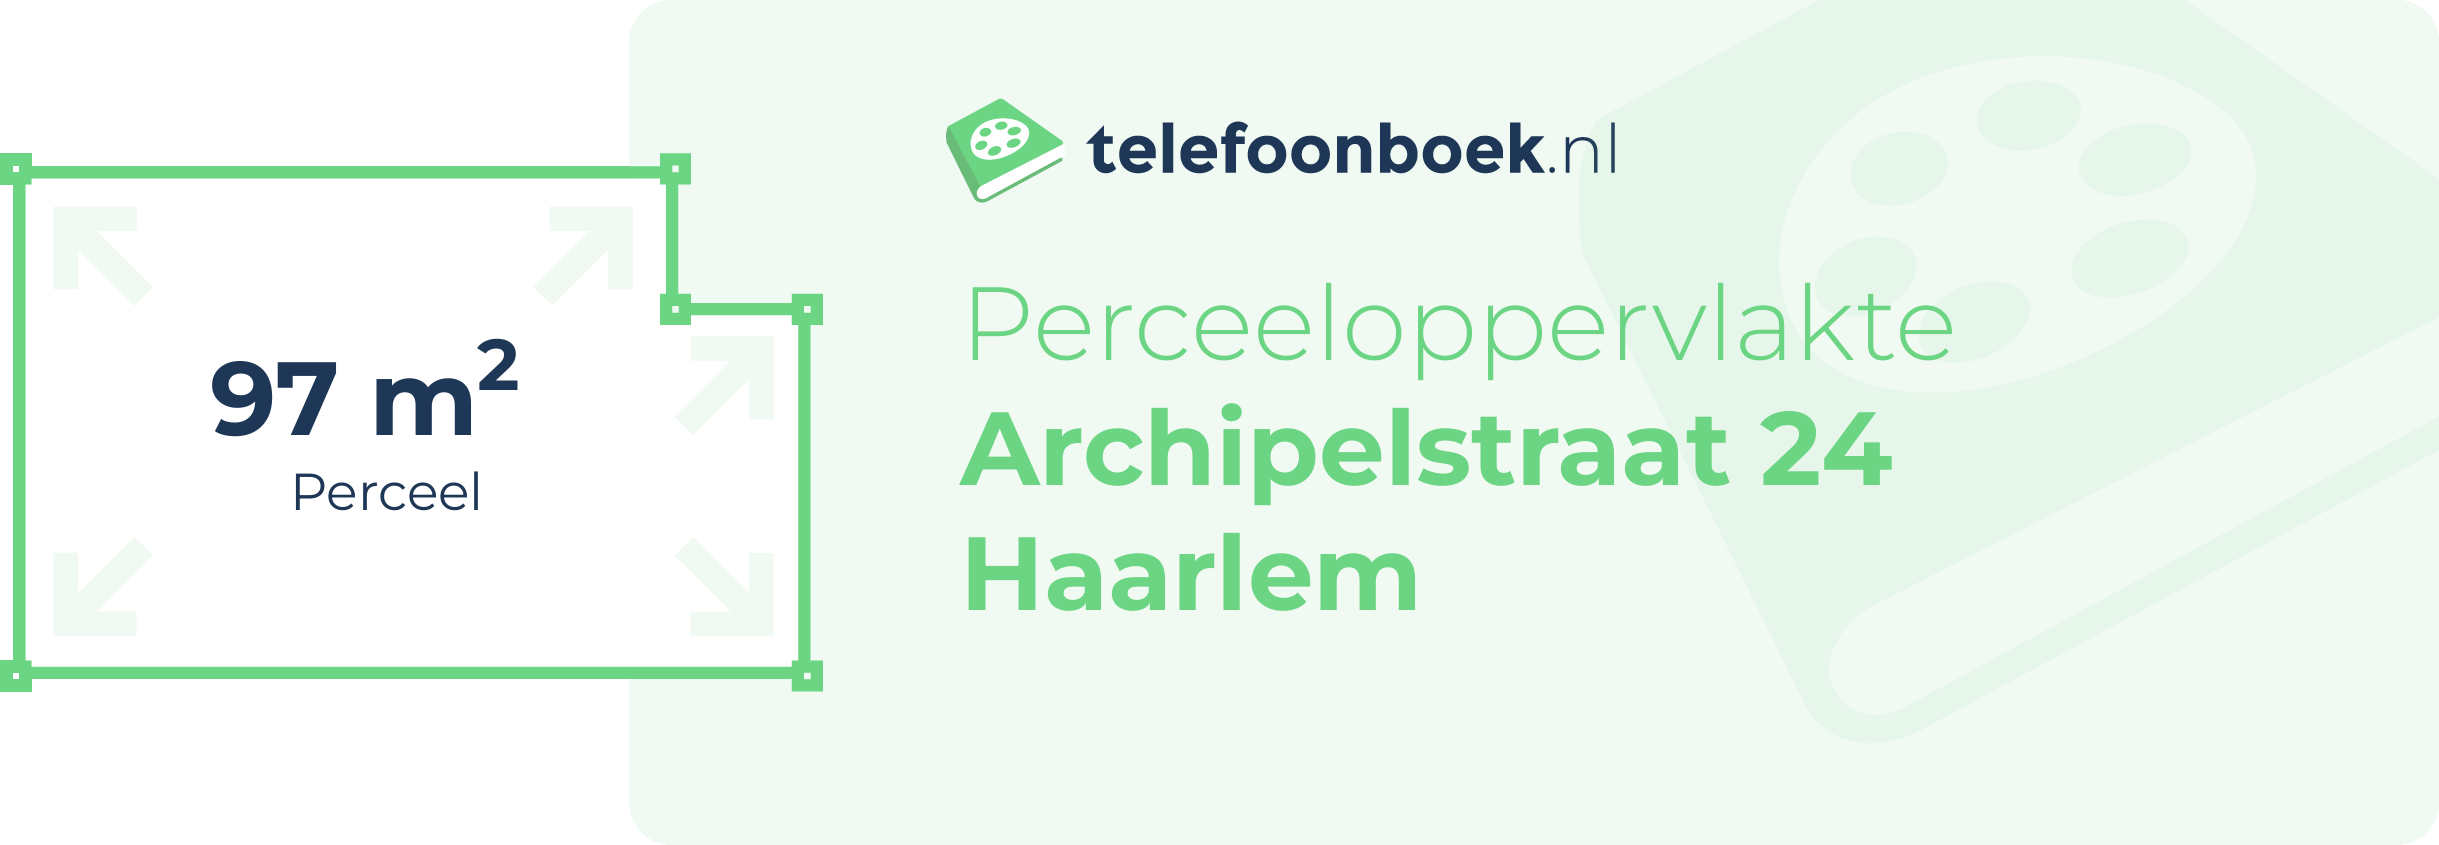 Perceeloppervlakte Archipelstraat 24 Haarlem